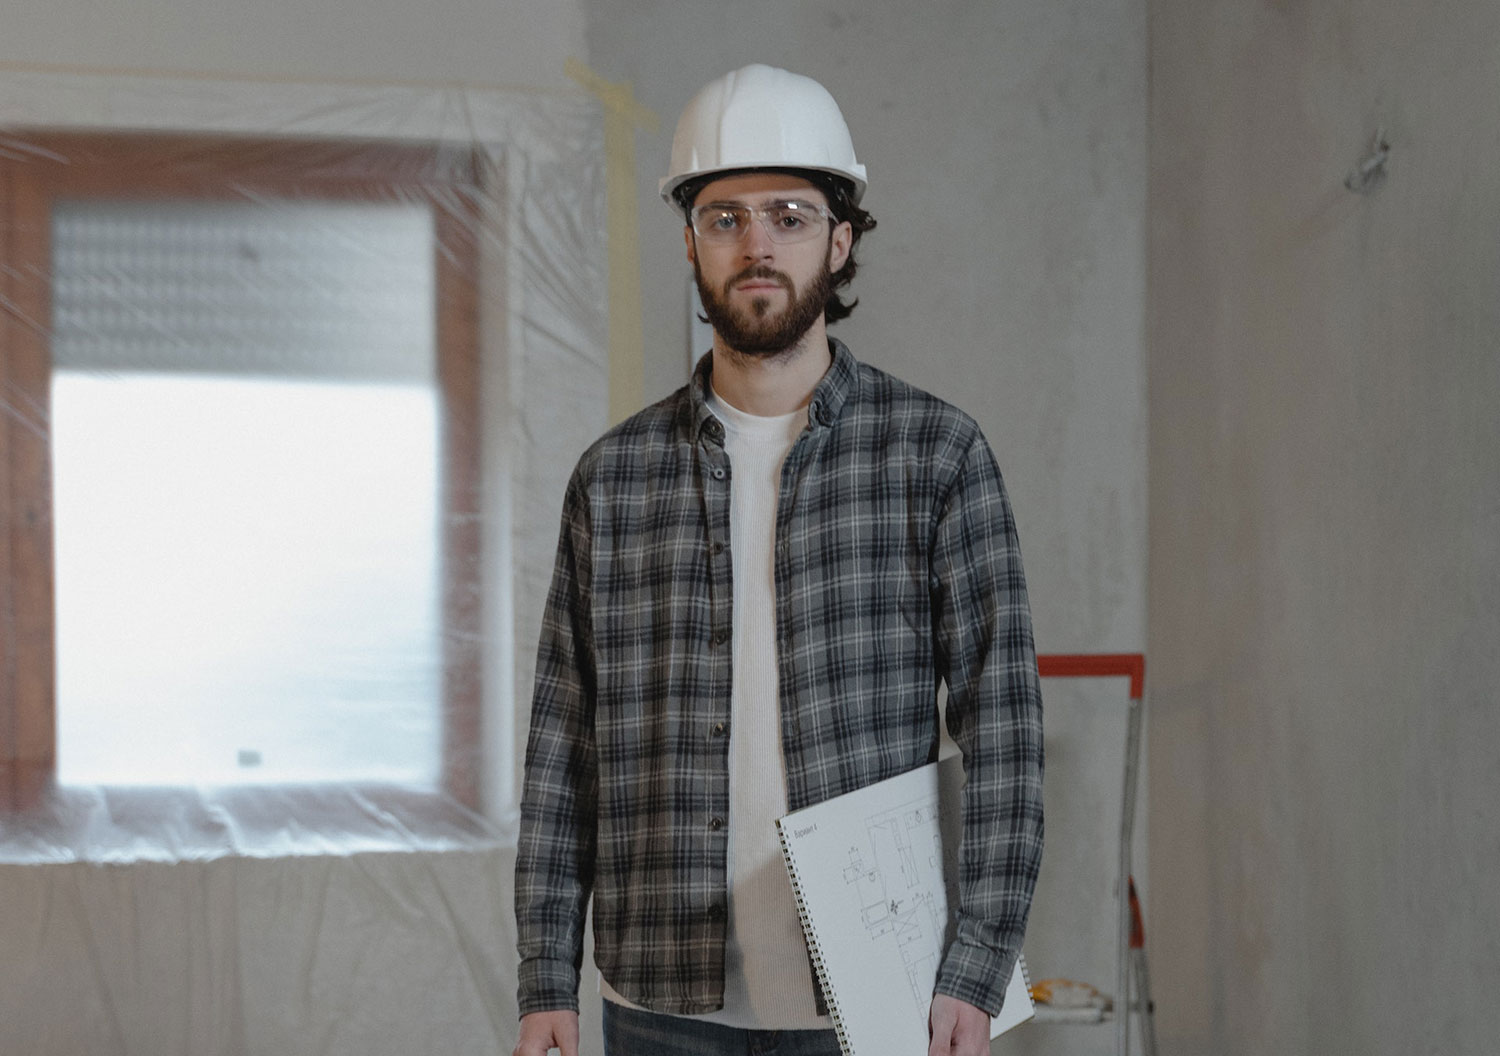 10 Construction Job Bidding Tips